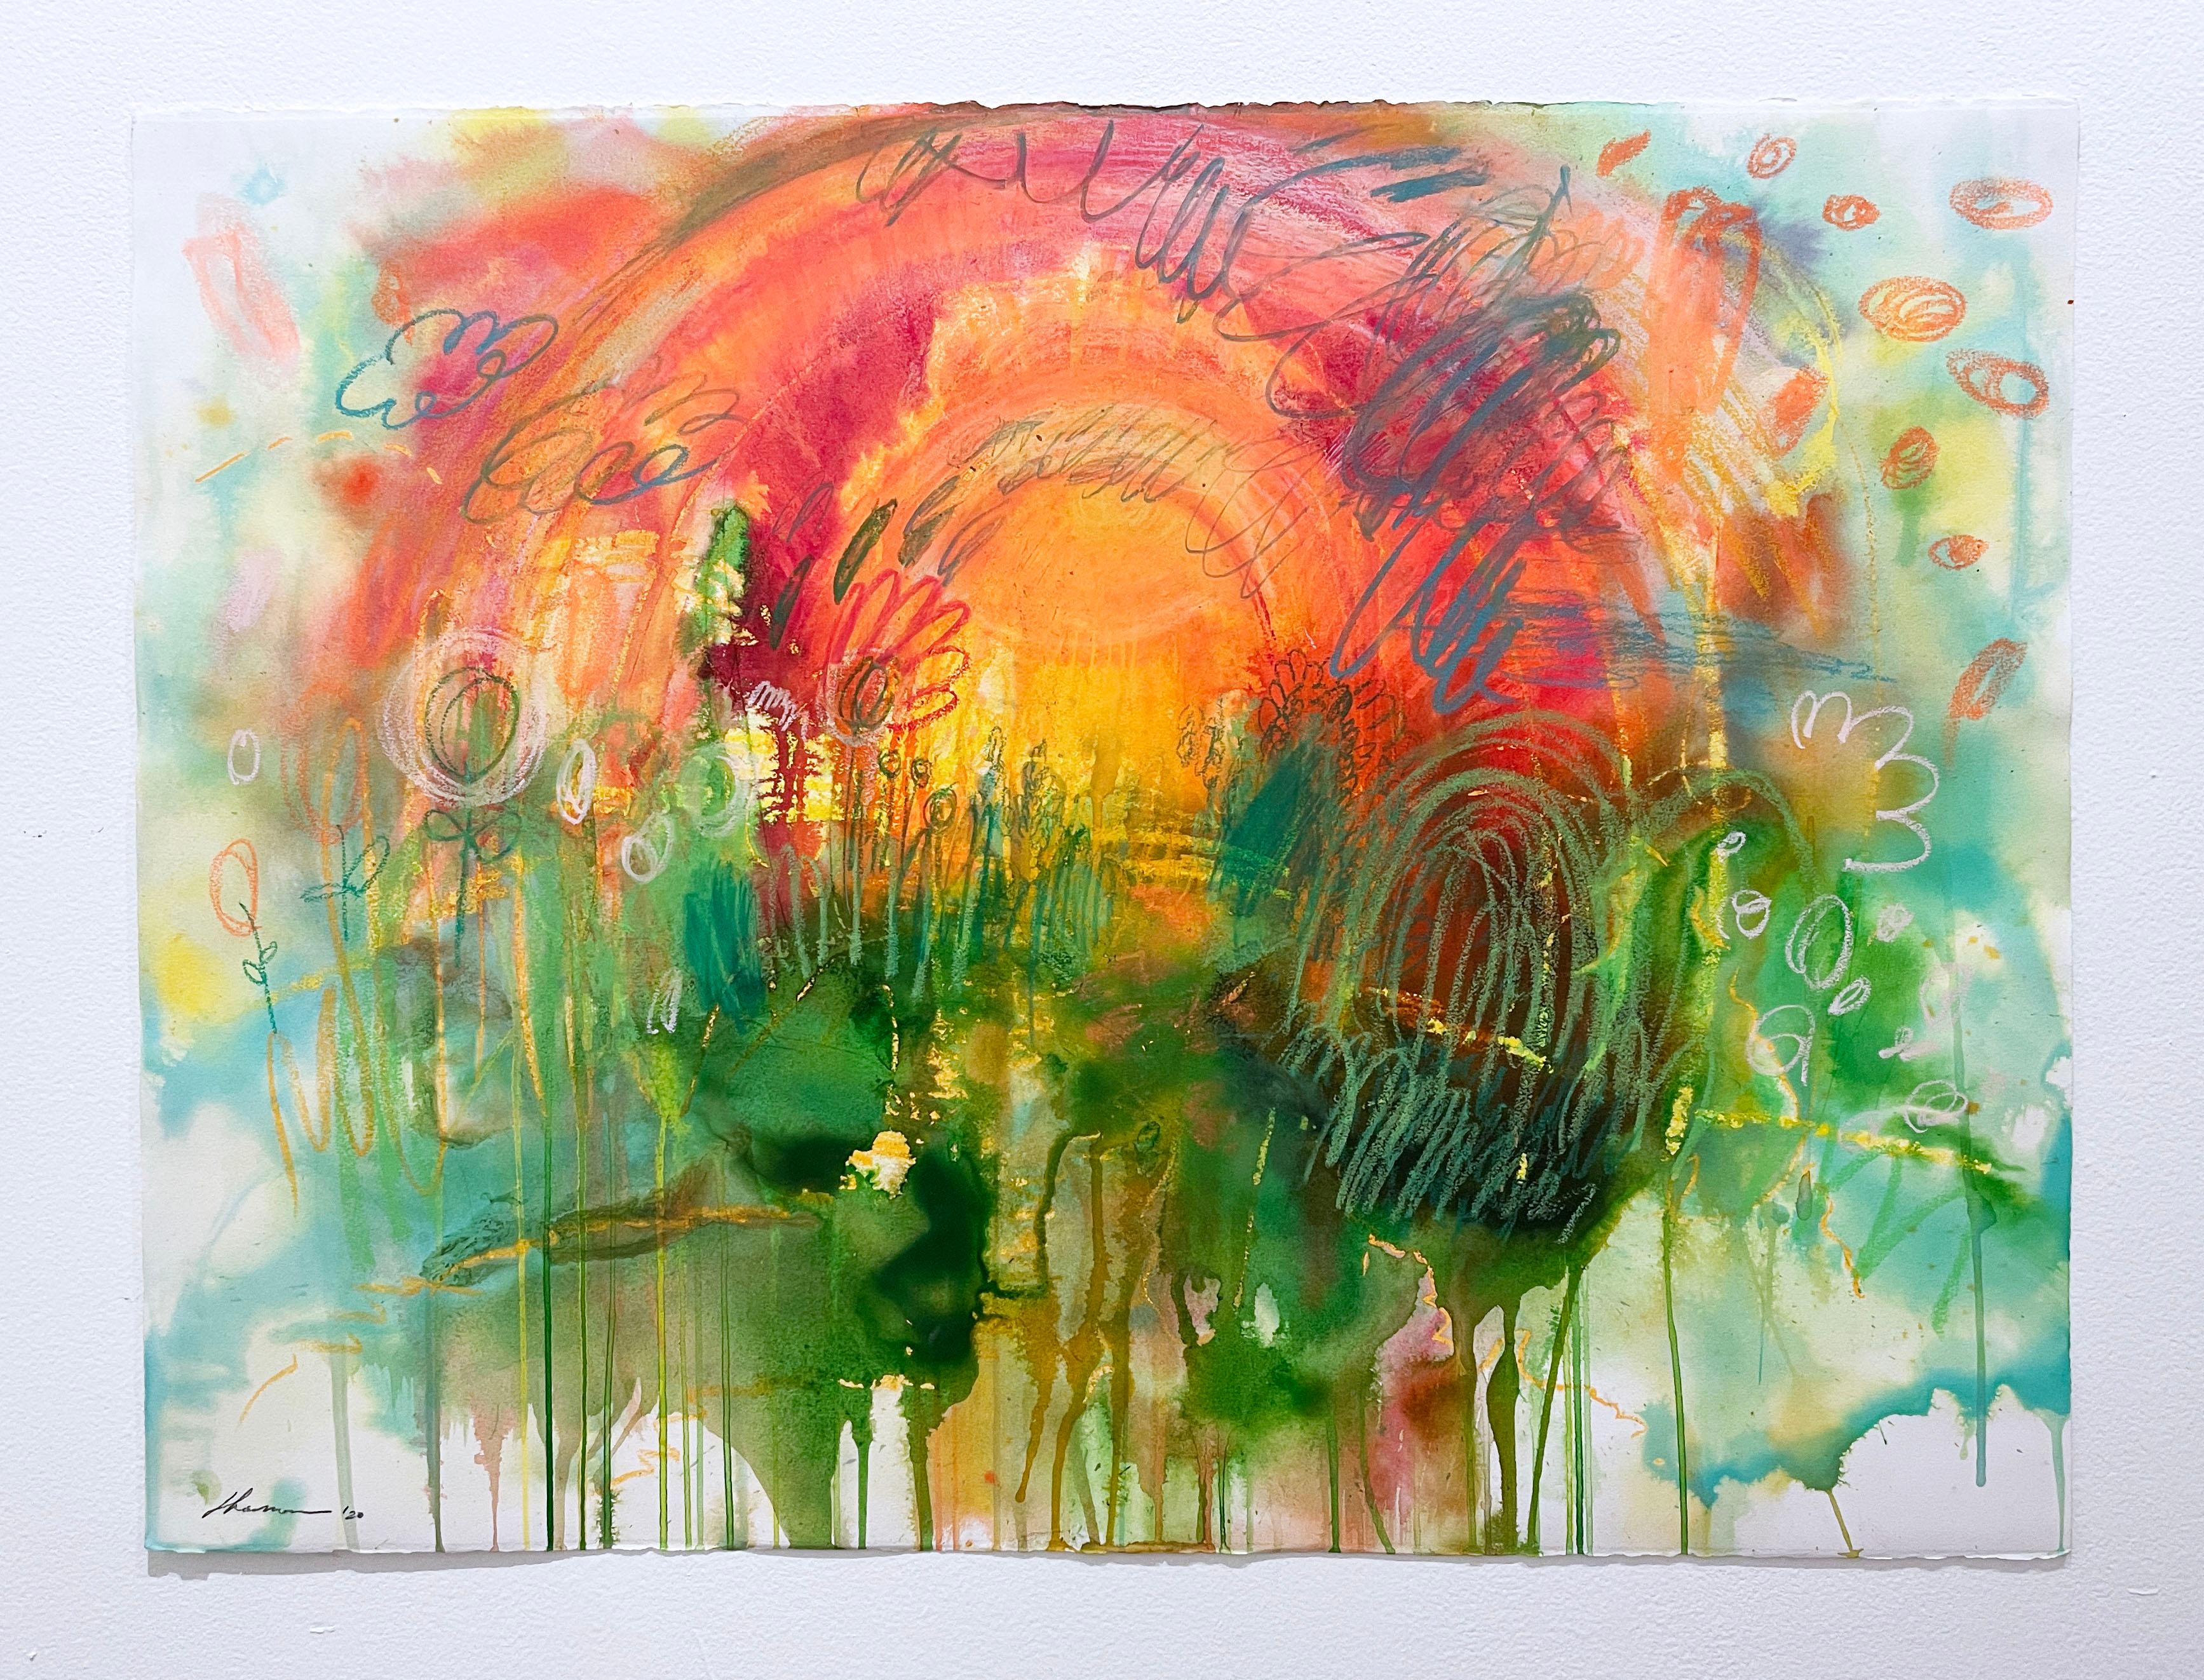 Warm & Golden (2020), surreal abstract dream-like landscape, garden, rainbow - Art by Shamona Stokes